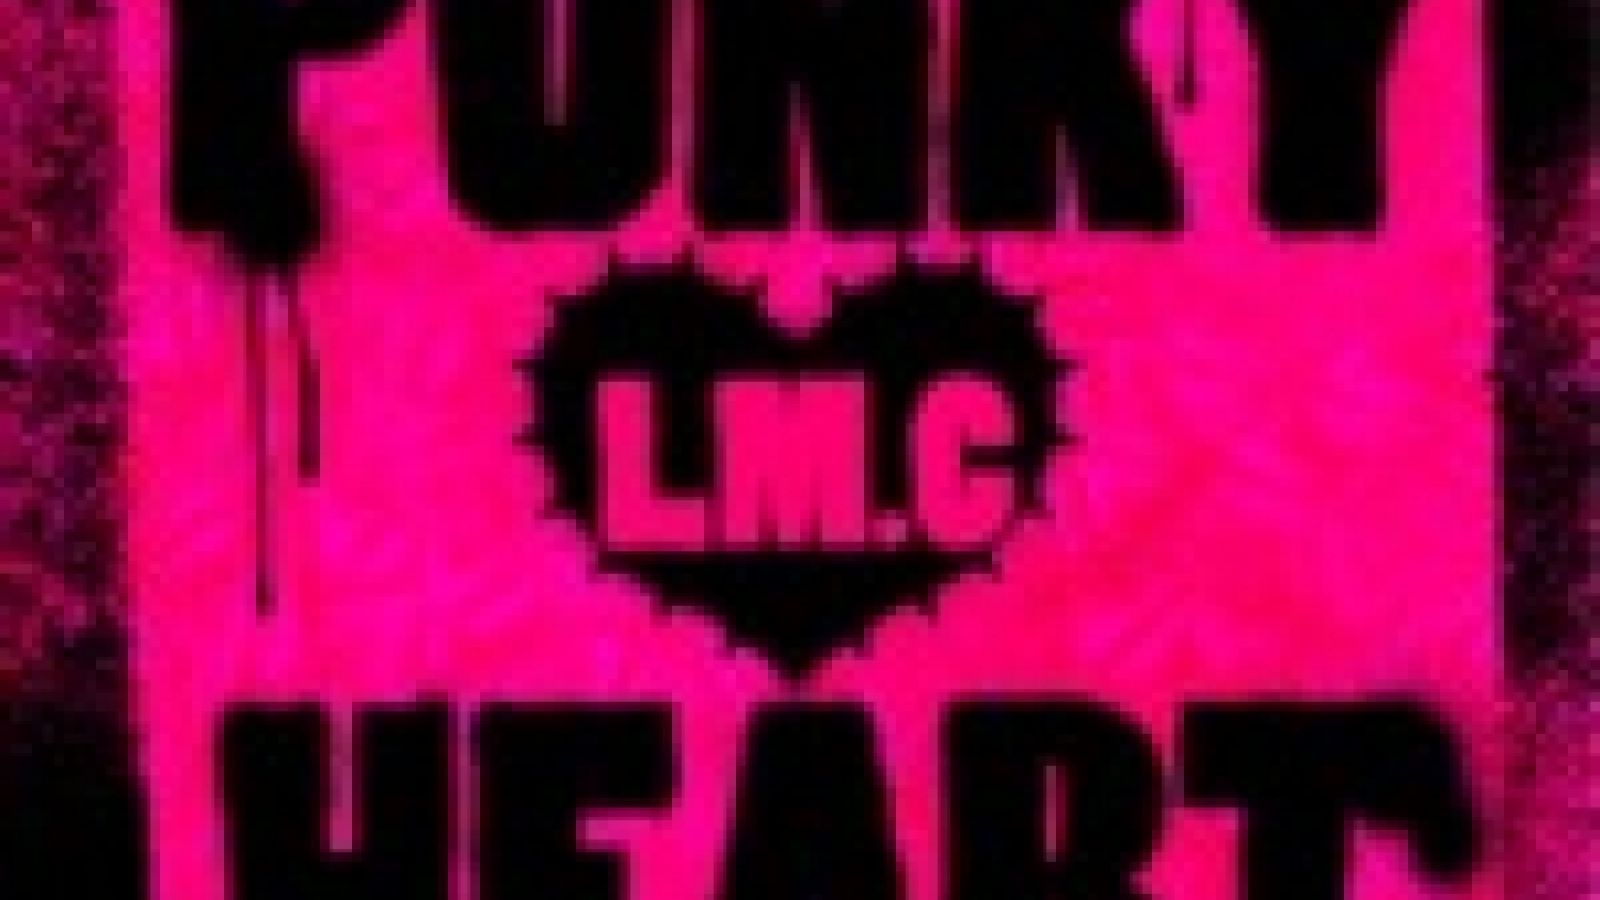 LM.C - PUNKY ❤ HEART © Icons8_team / CC0